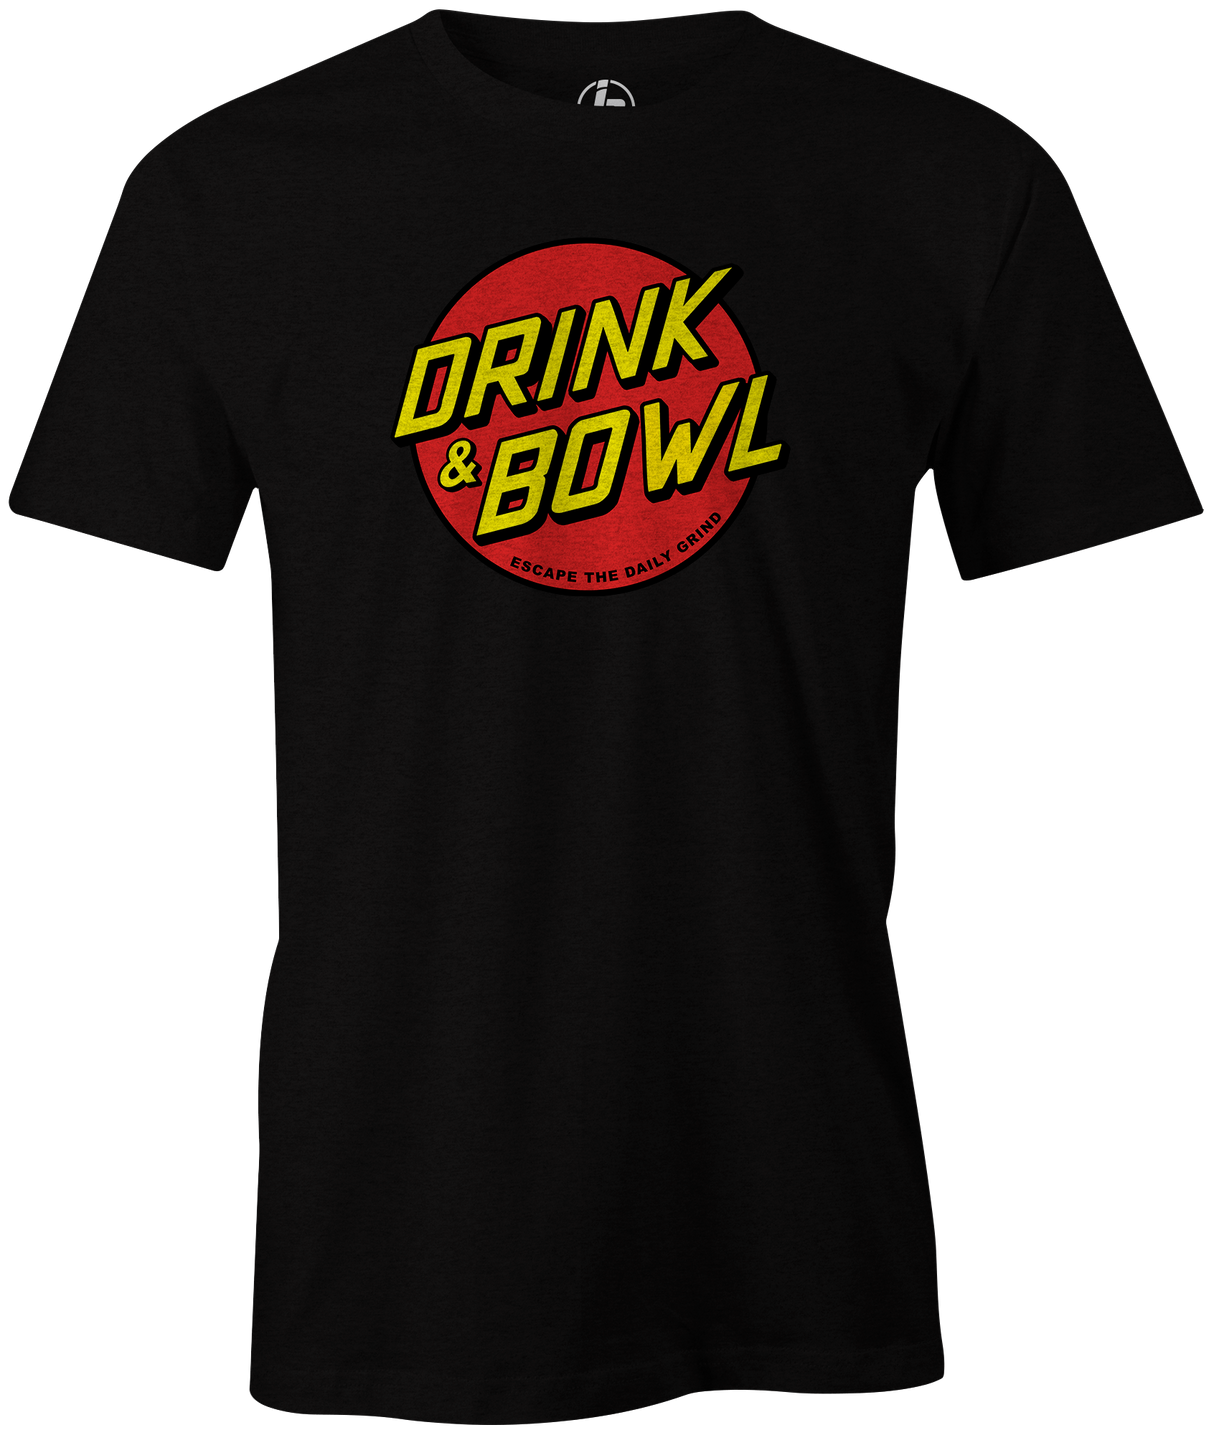 Drink & Bowl Pop Culture Bowling T-Shirt Black